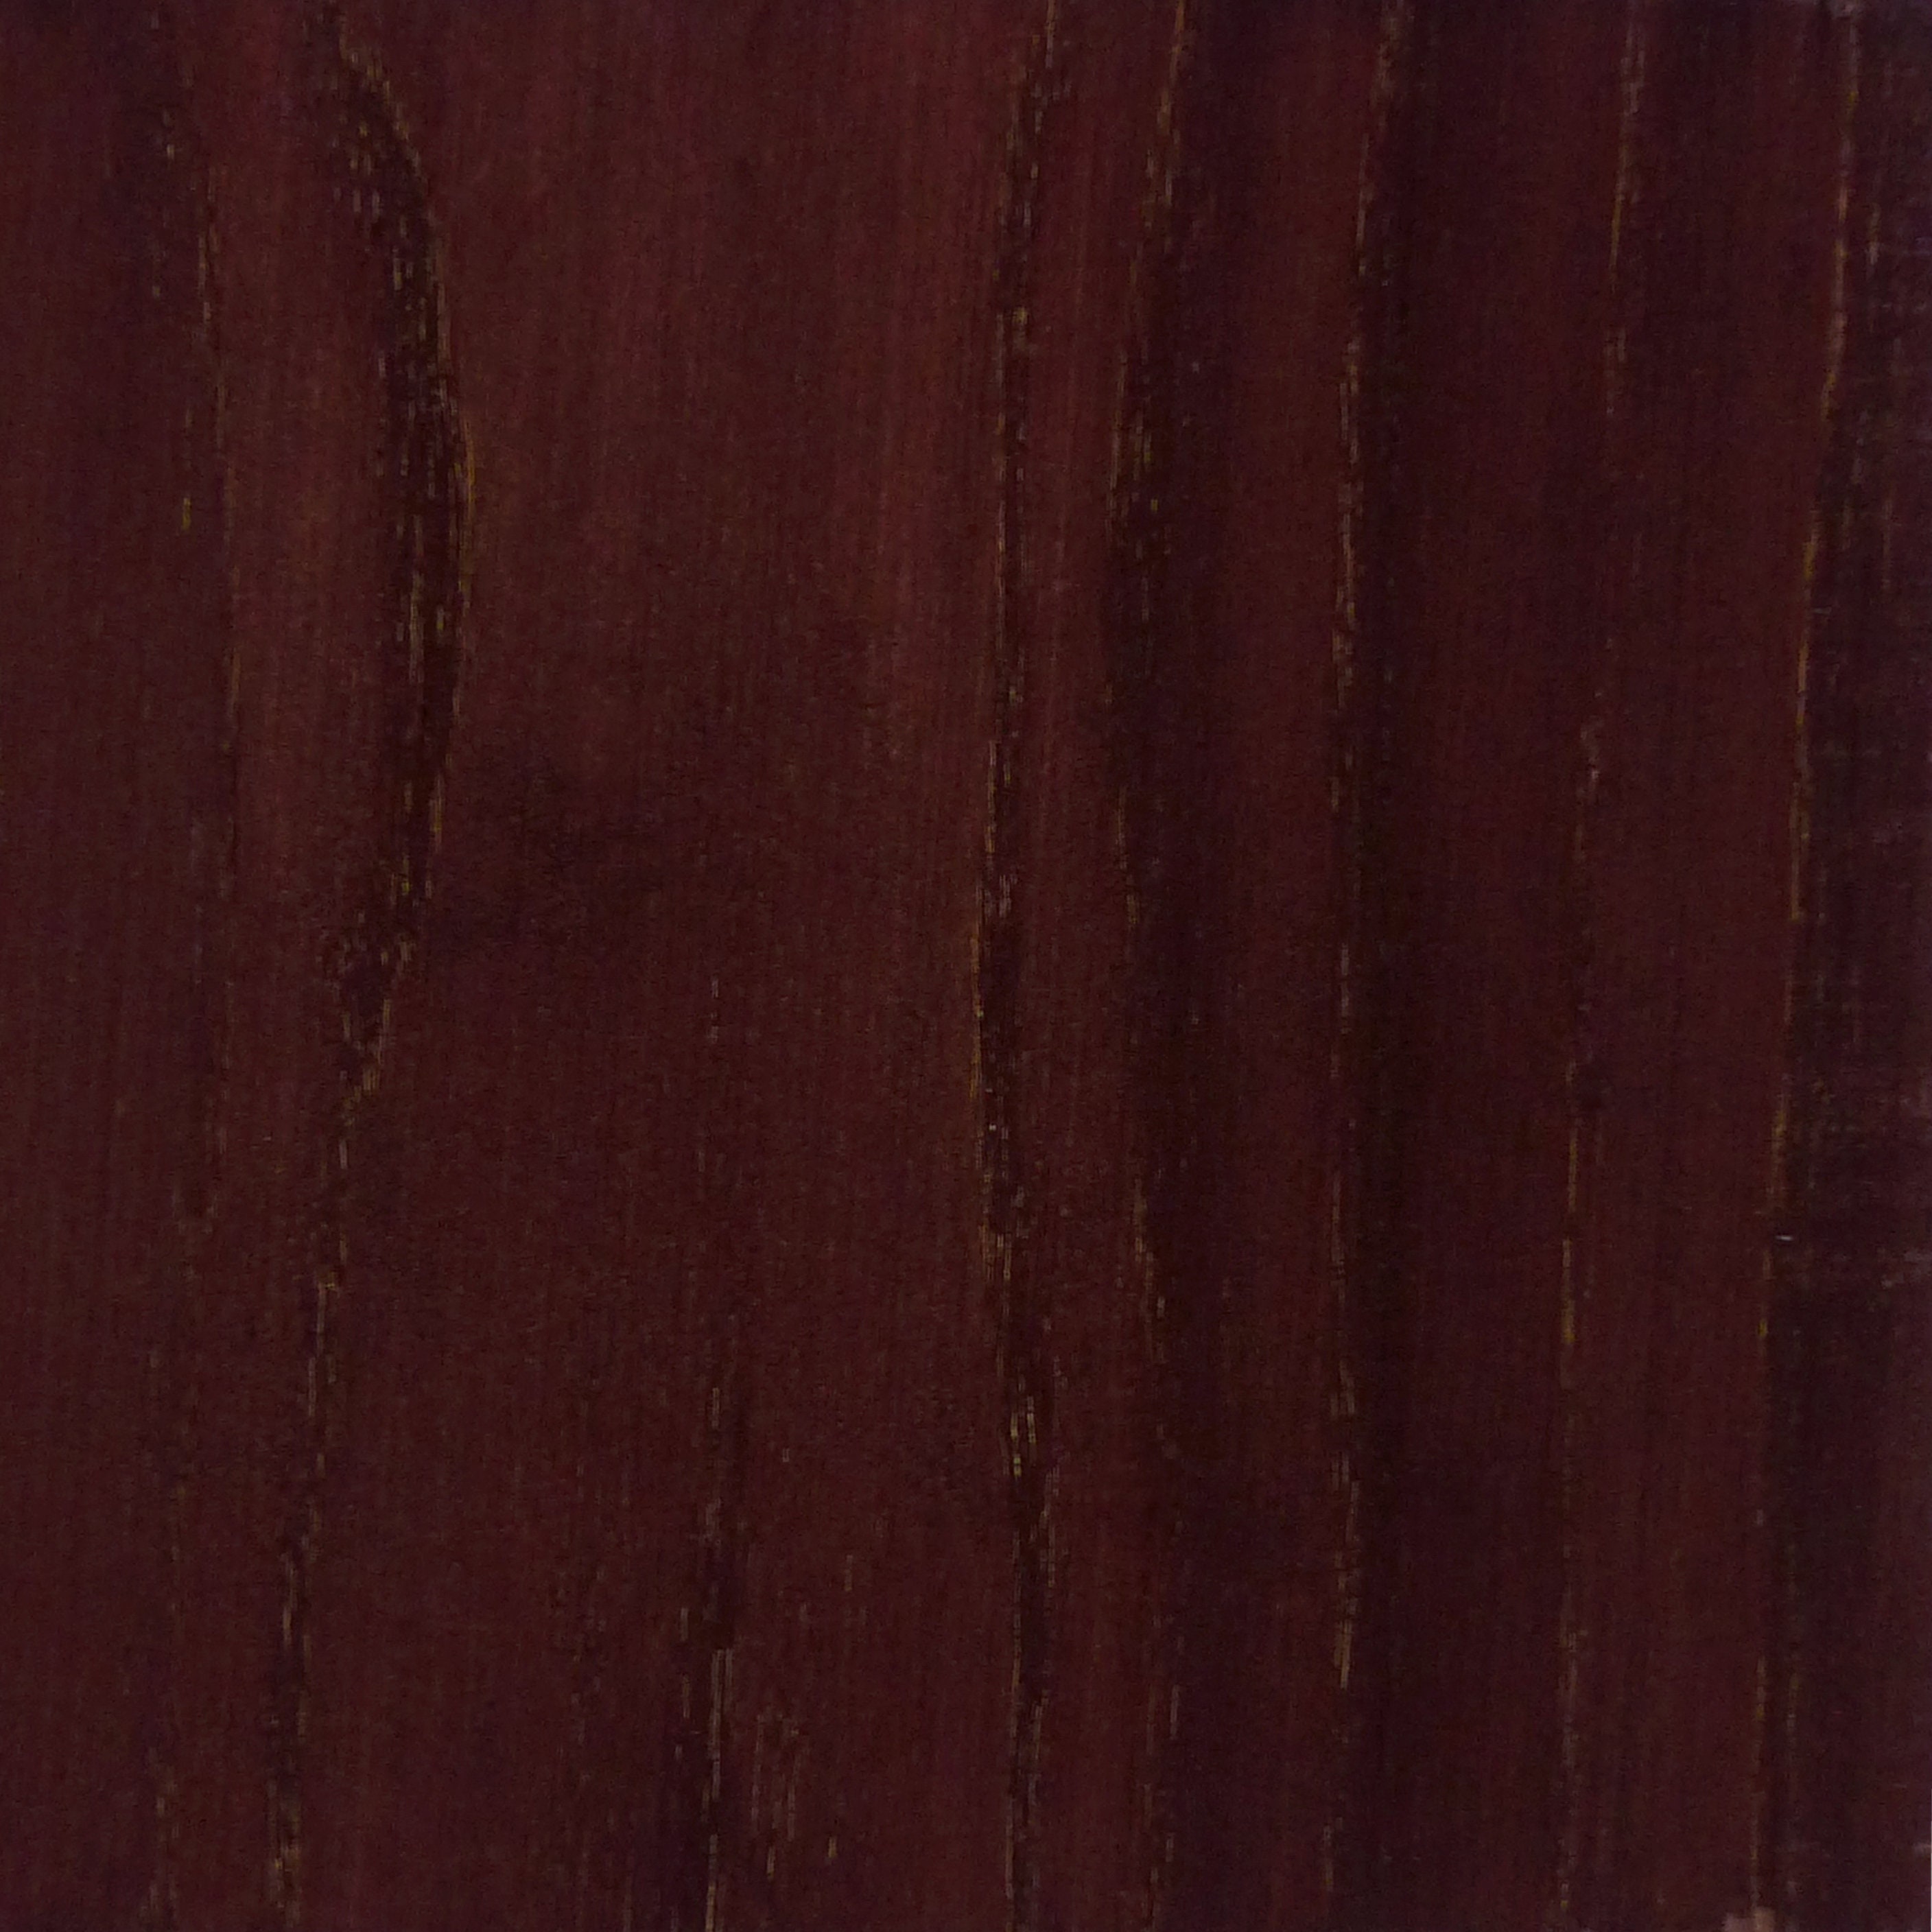 dartfords Brown Mahogany Interior Spirit Based Wood Dye 230ml Bottle